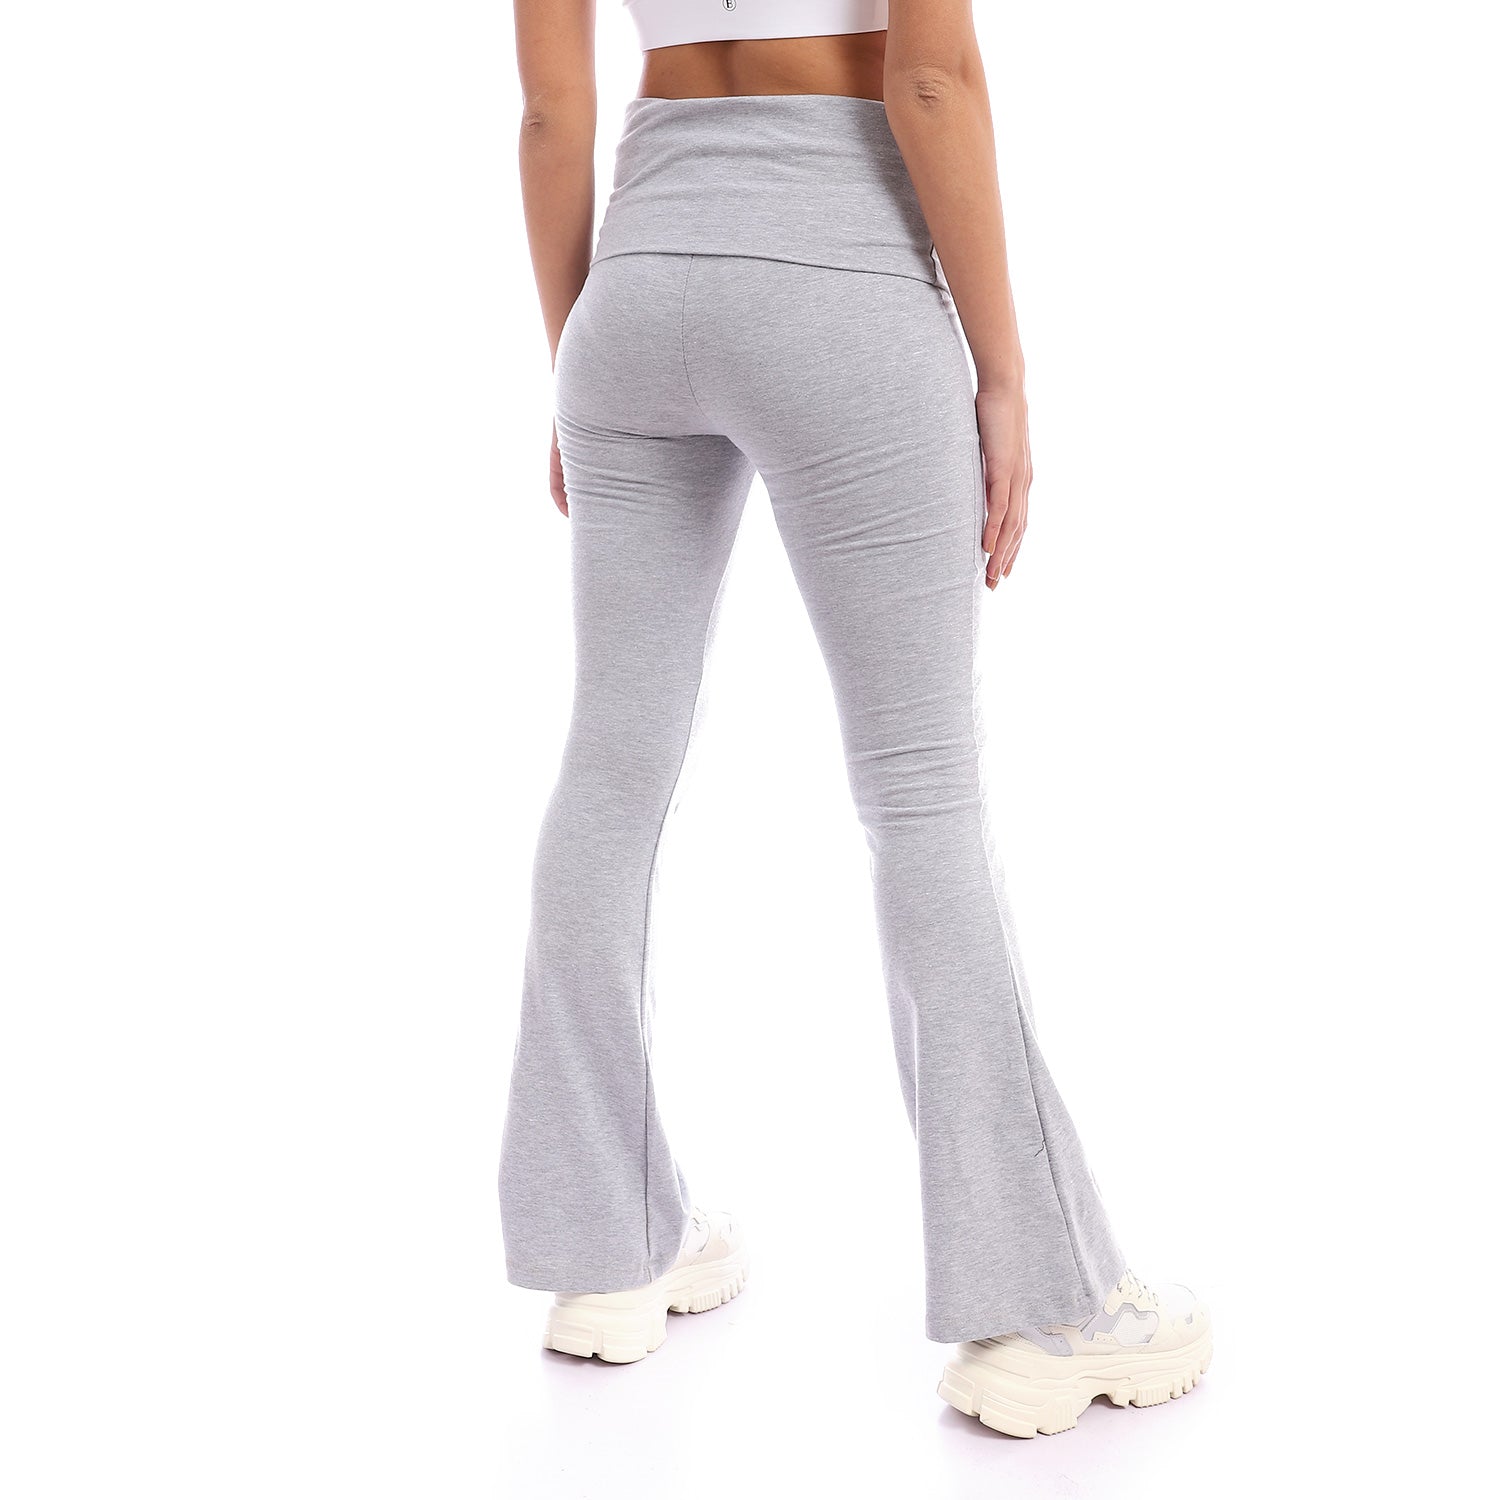 Foldover Yoga pants • Tise